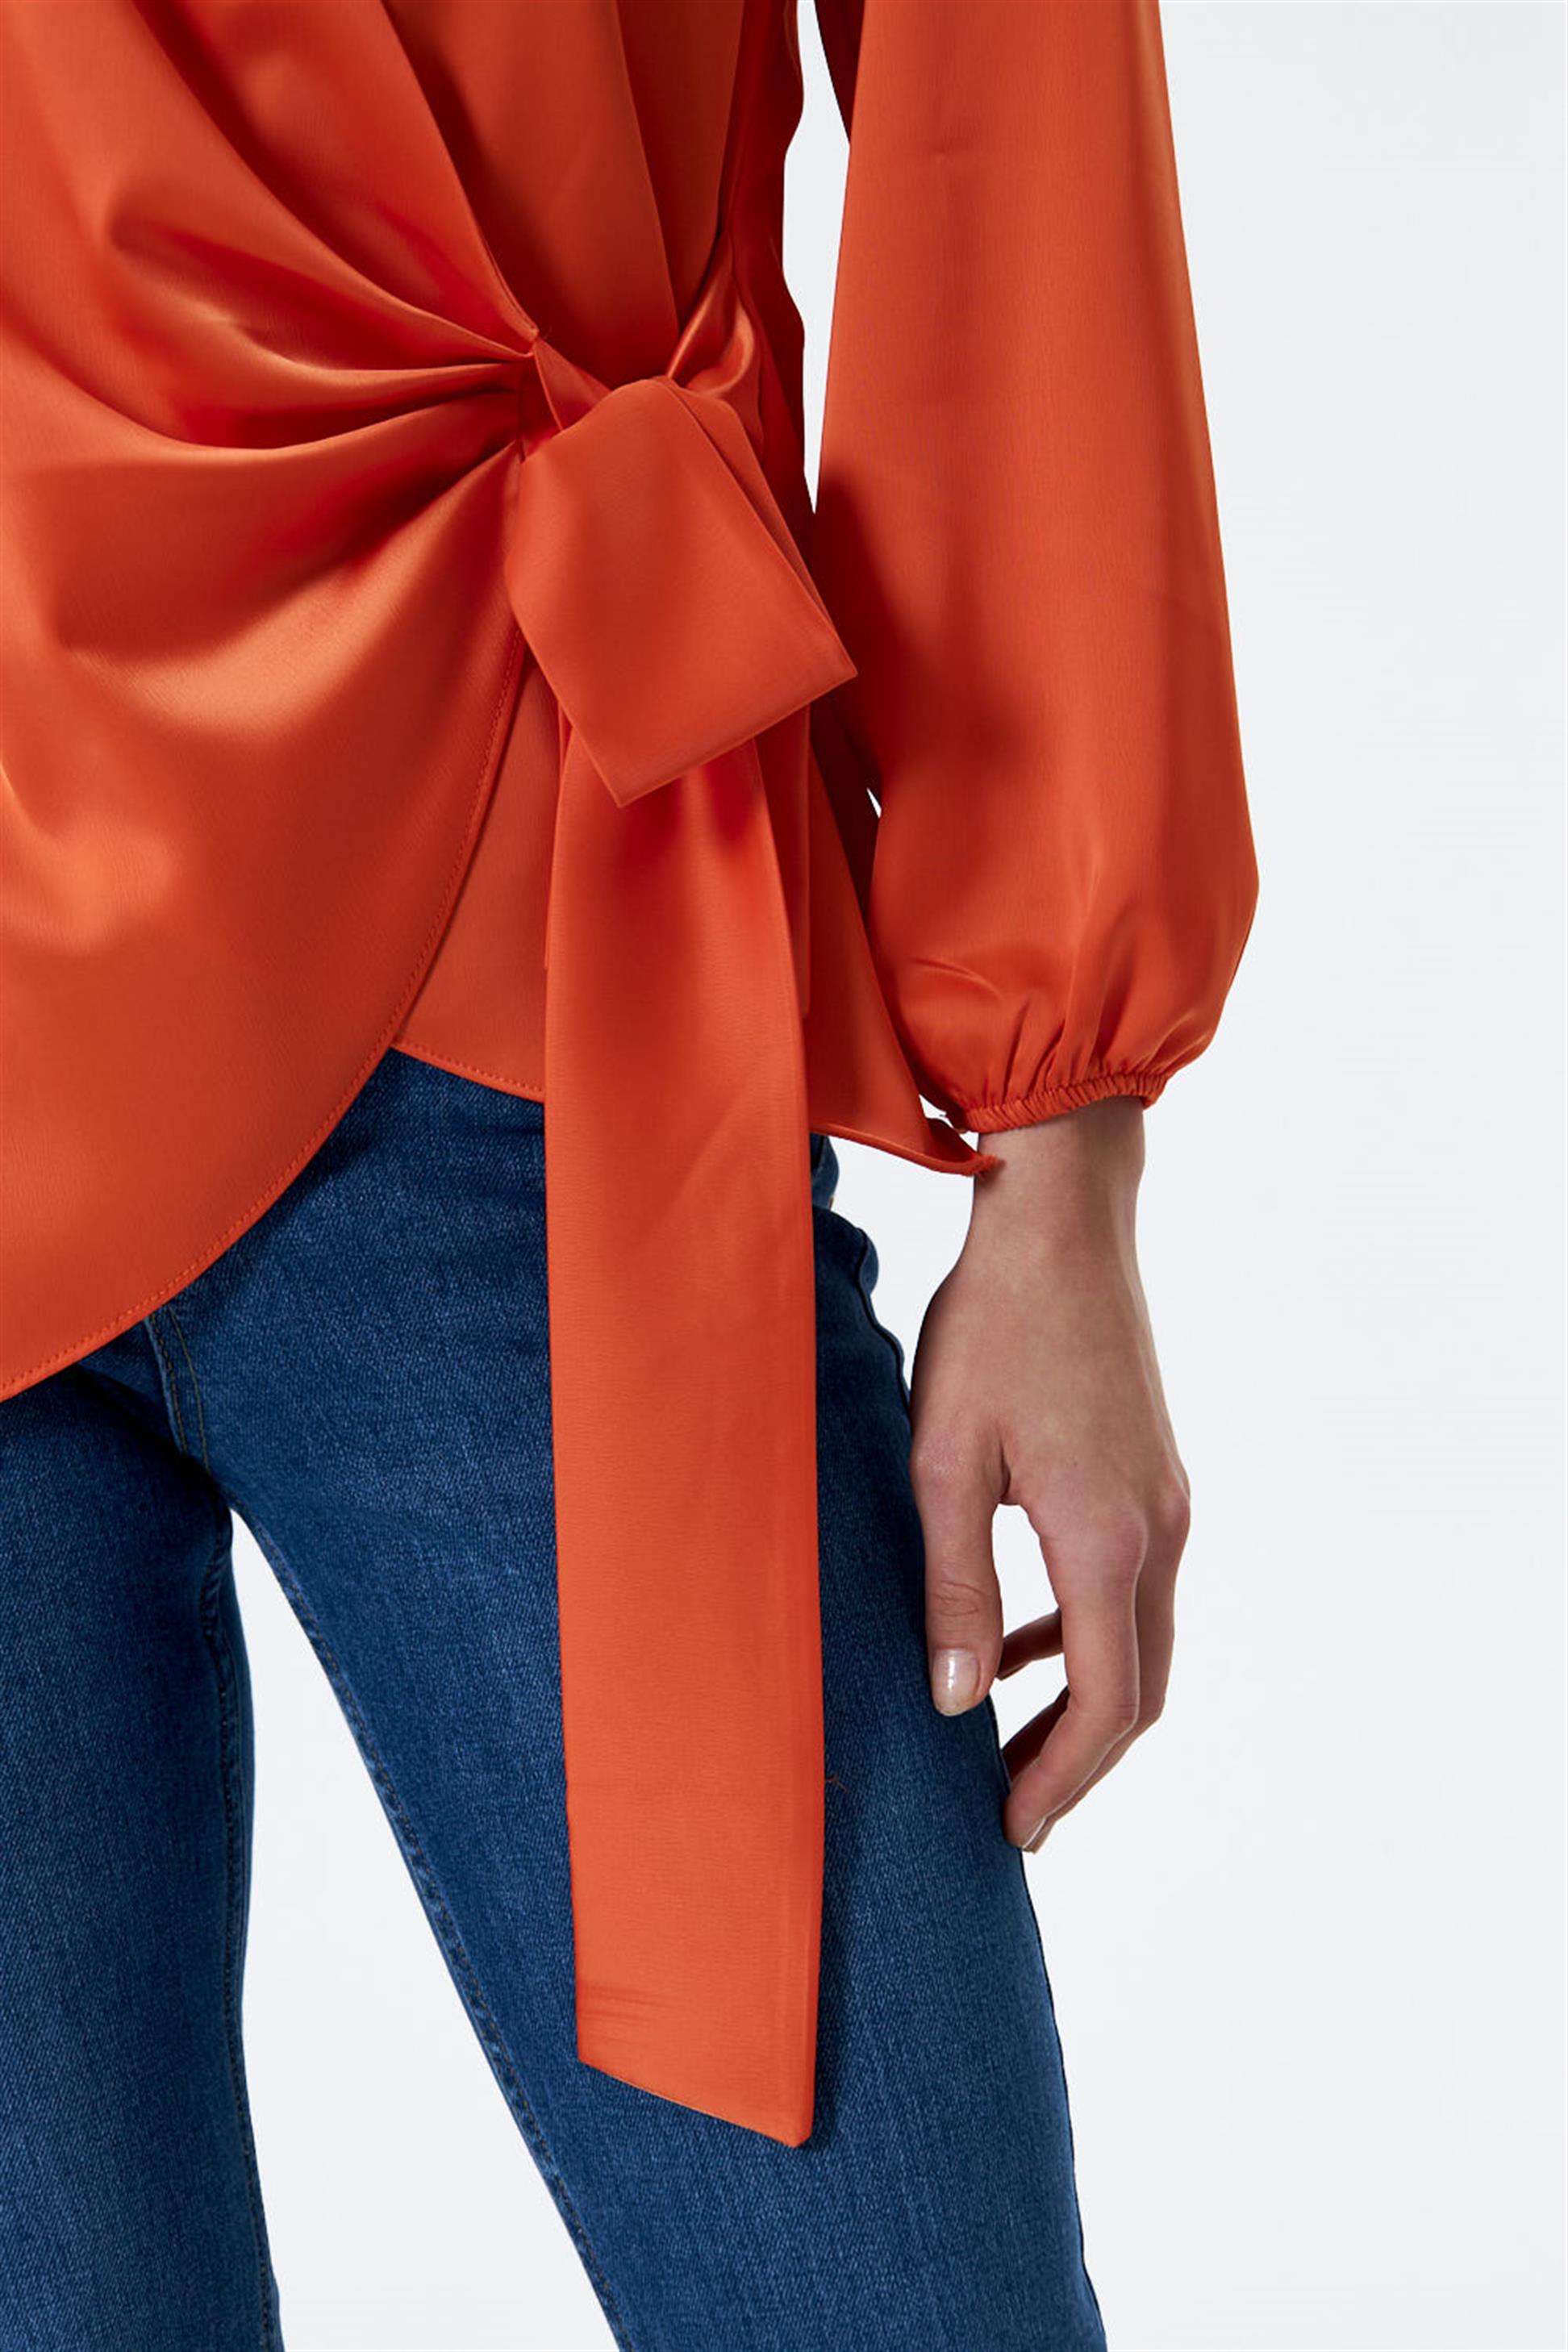 Double Breasted Tie Orange Women's Satin Blouse | Tuba Boutique